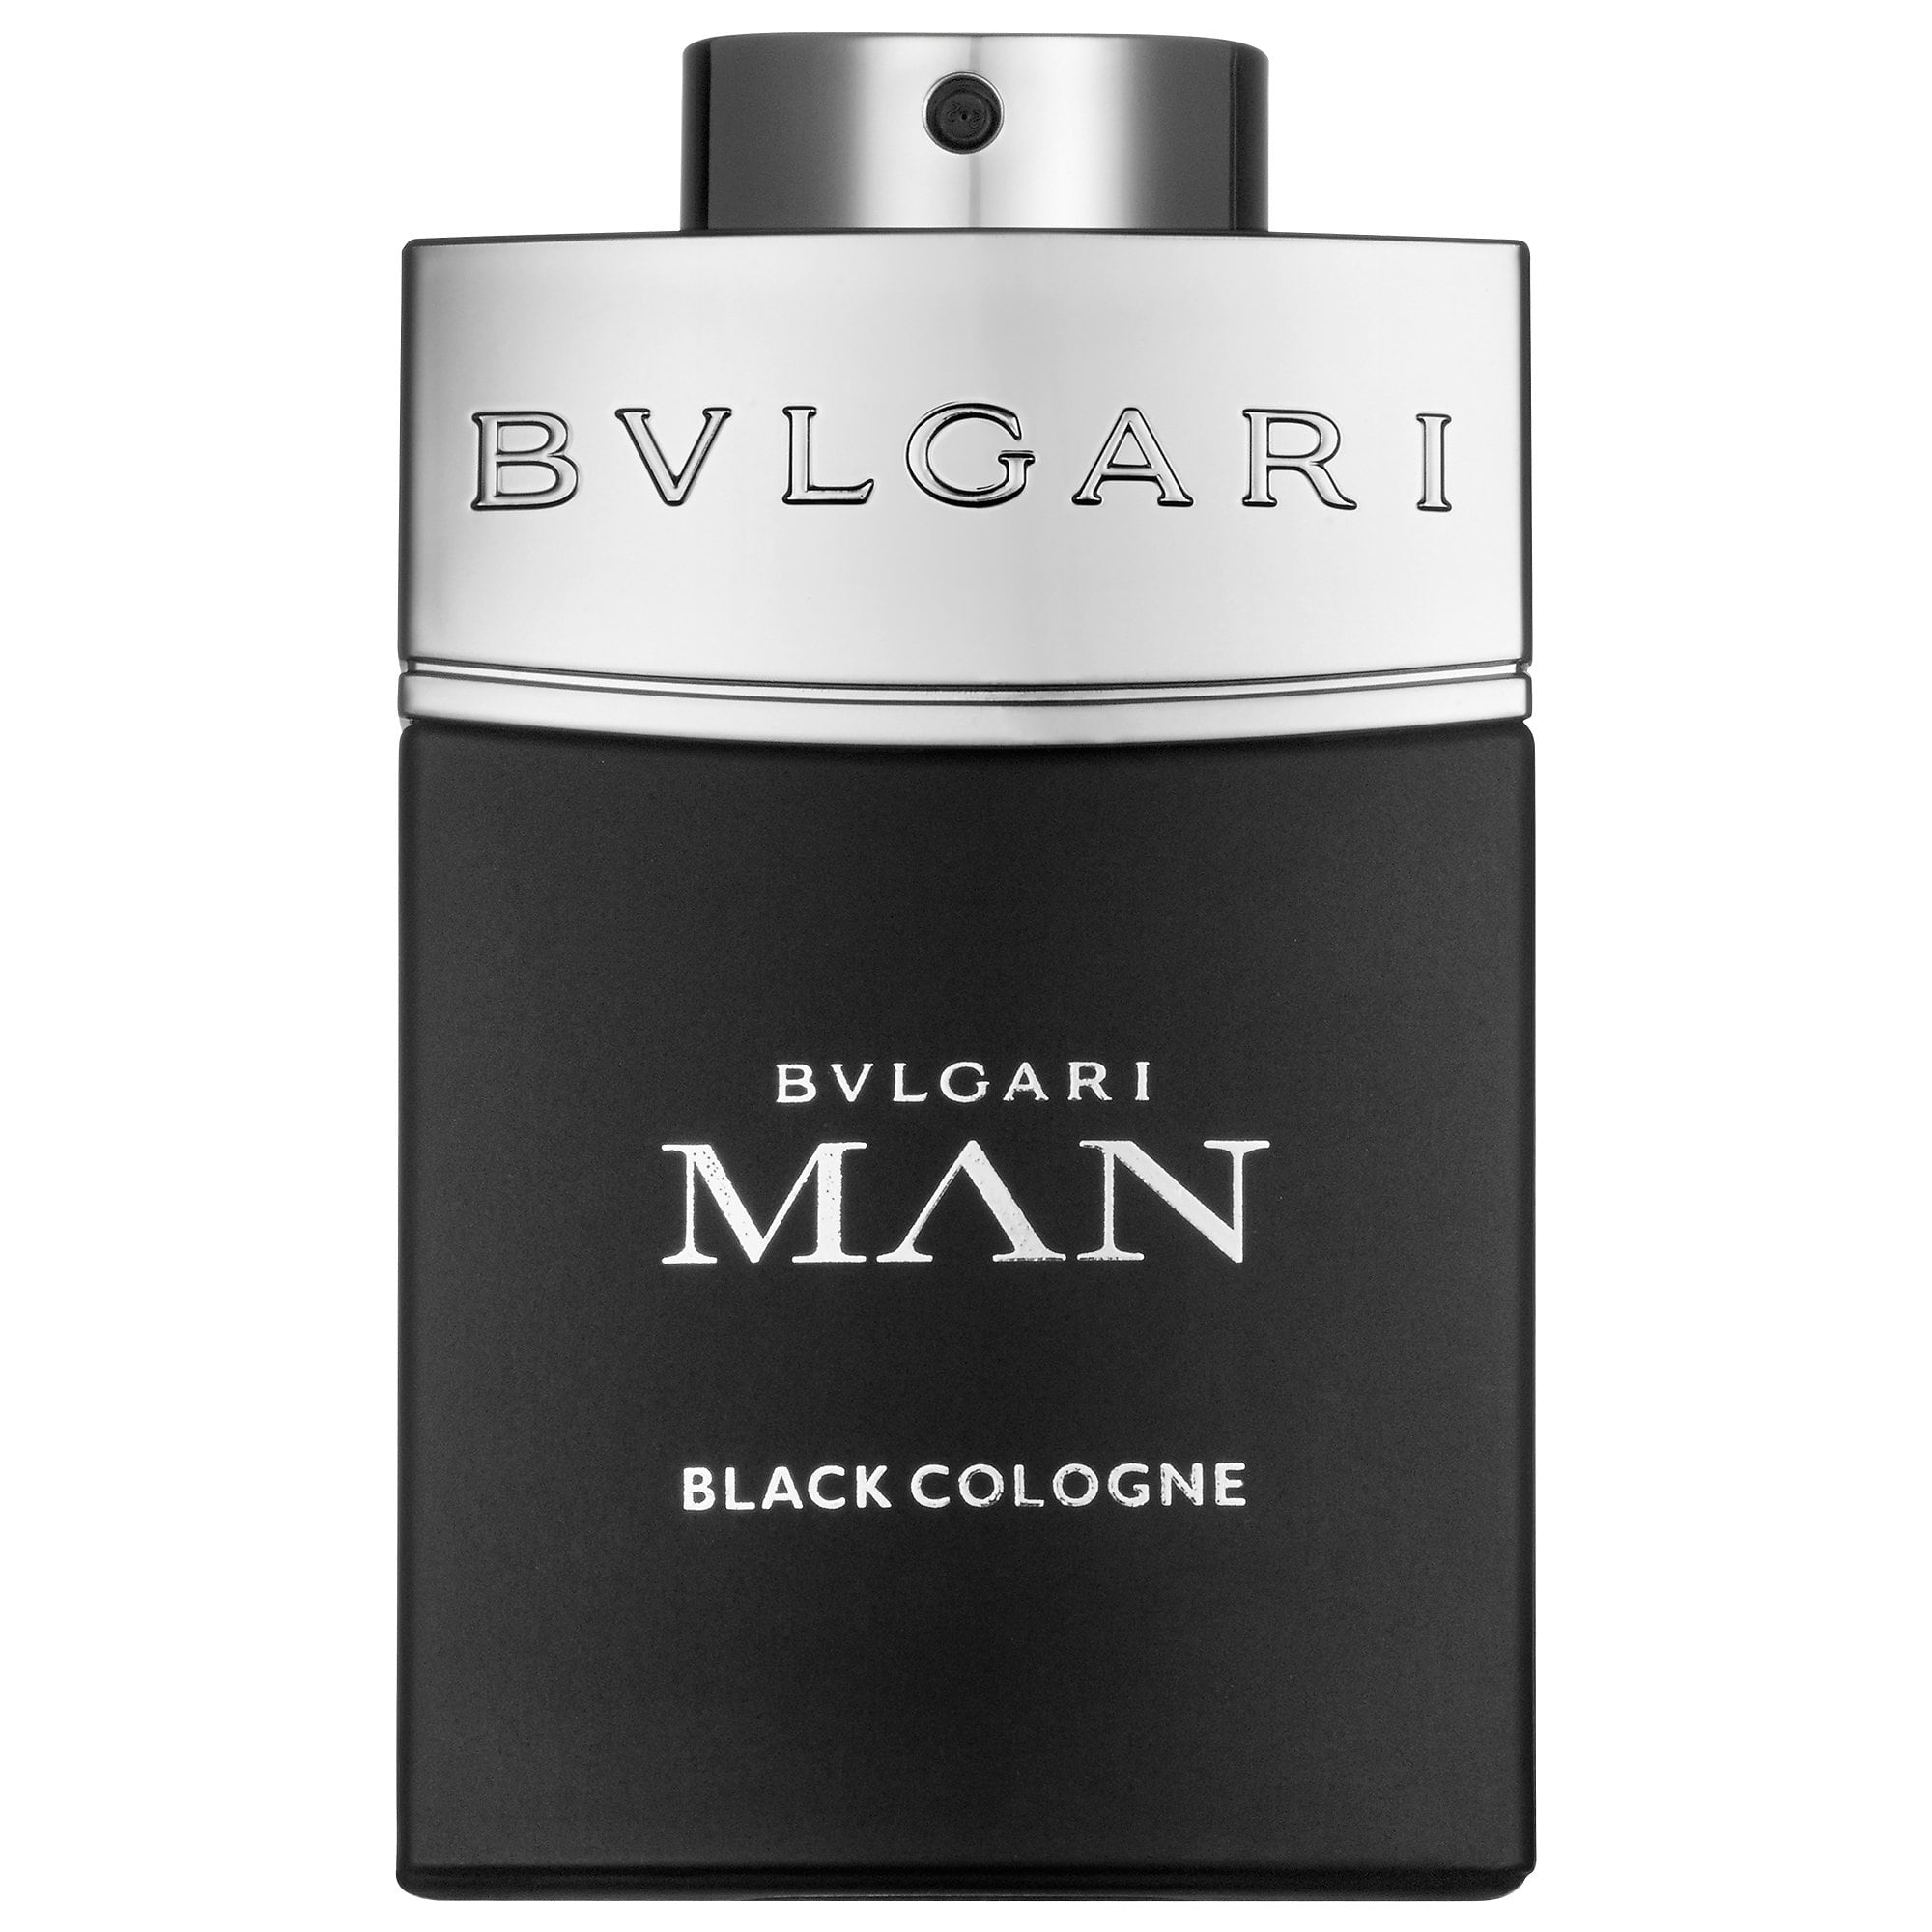 Best Bvlgari Man Black cologne Men 